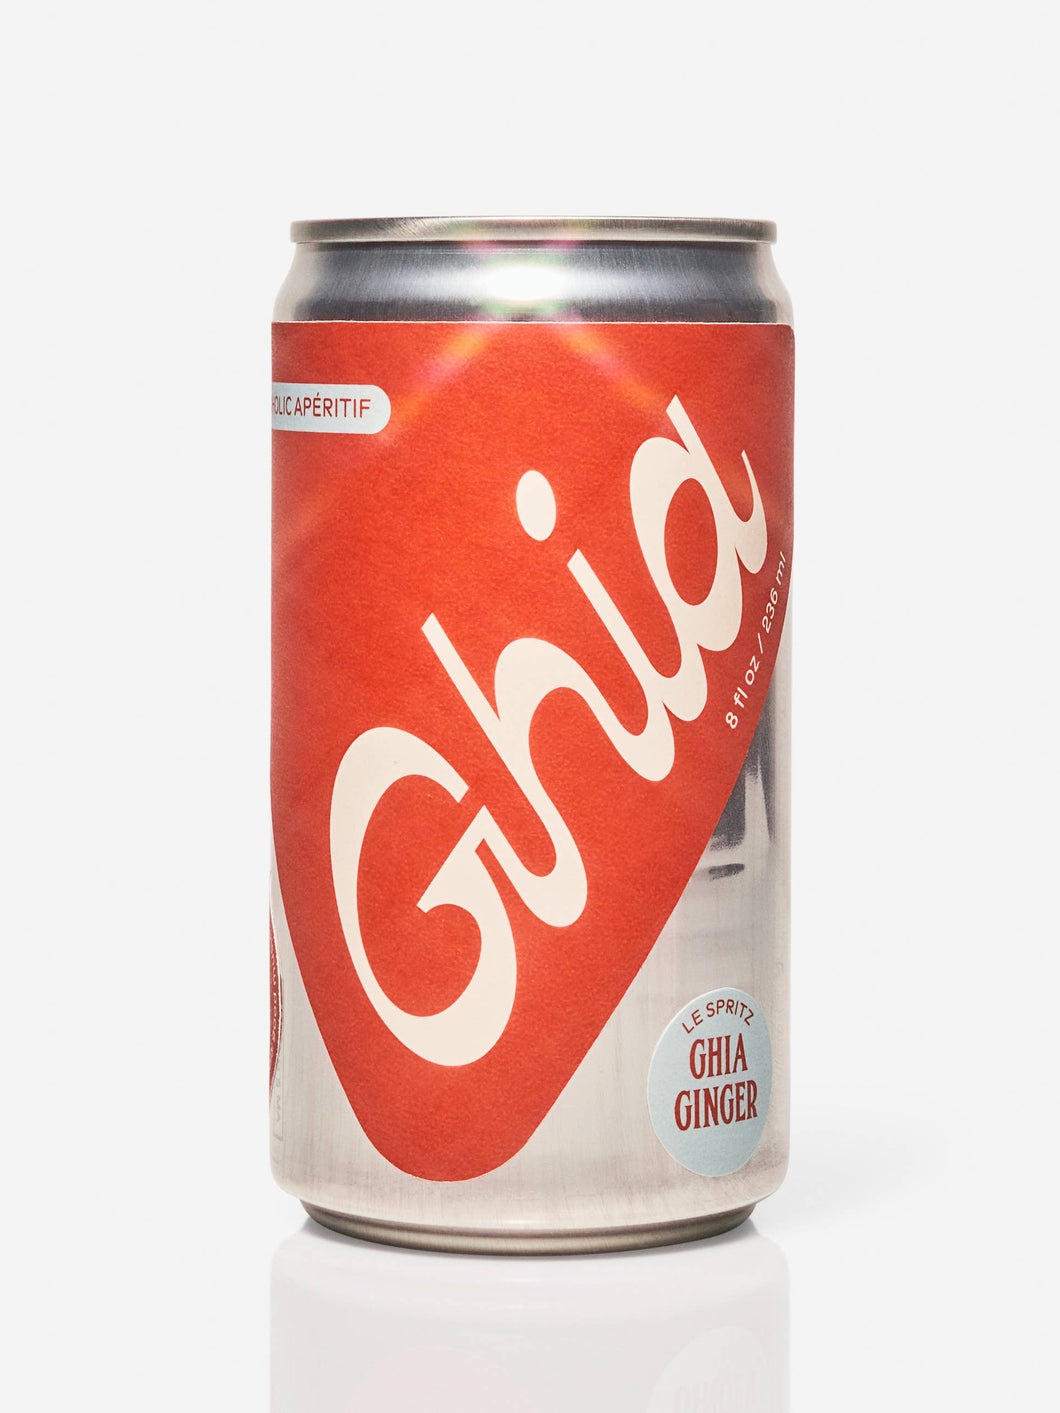 Ghia - Le Spritz - Ghia Ginger- SINGLE CAN 8 oz